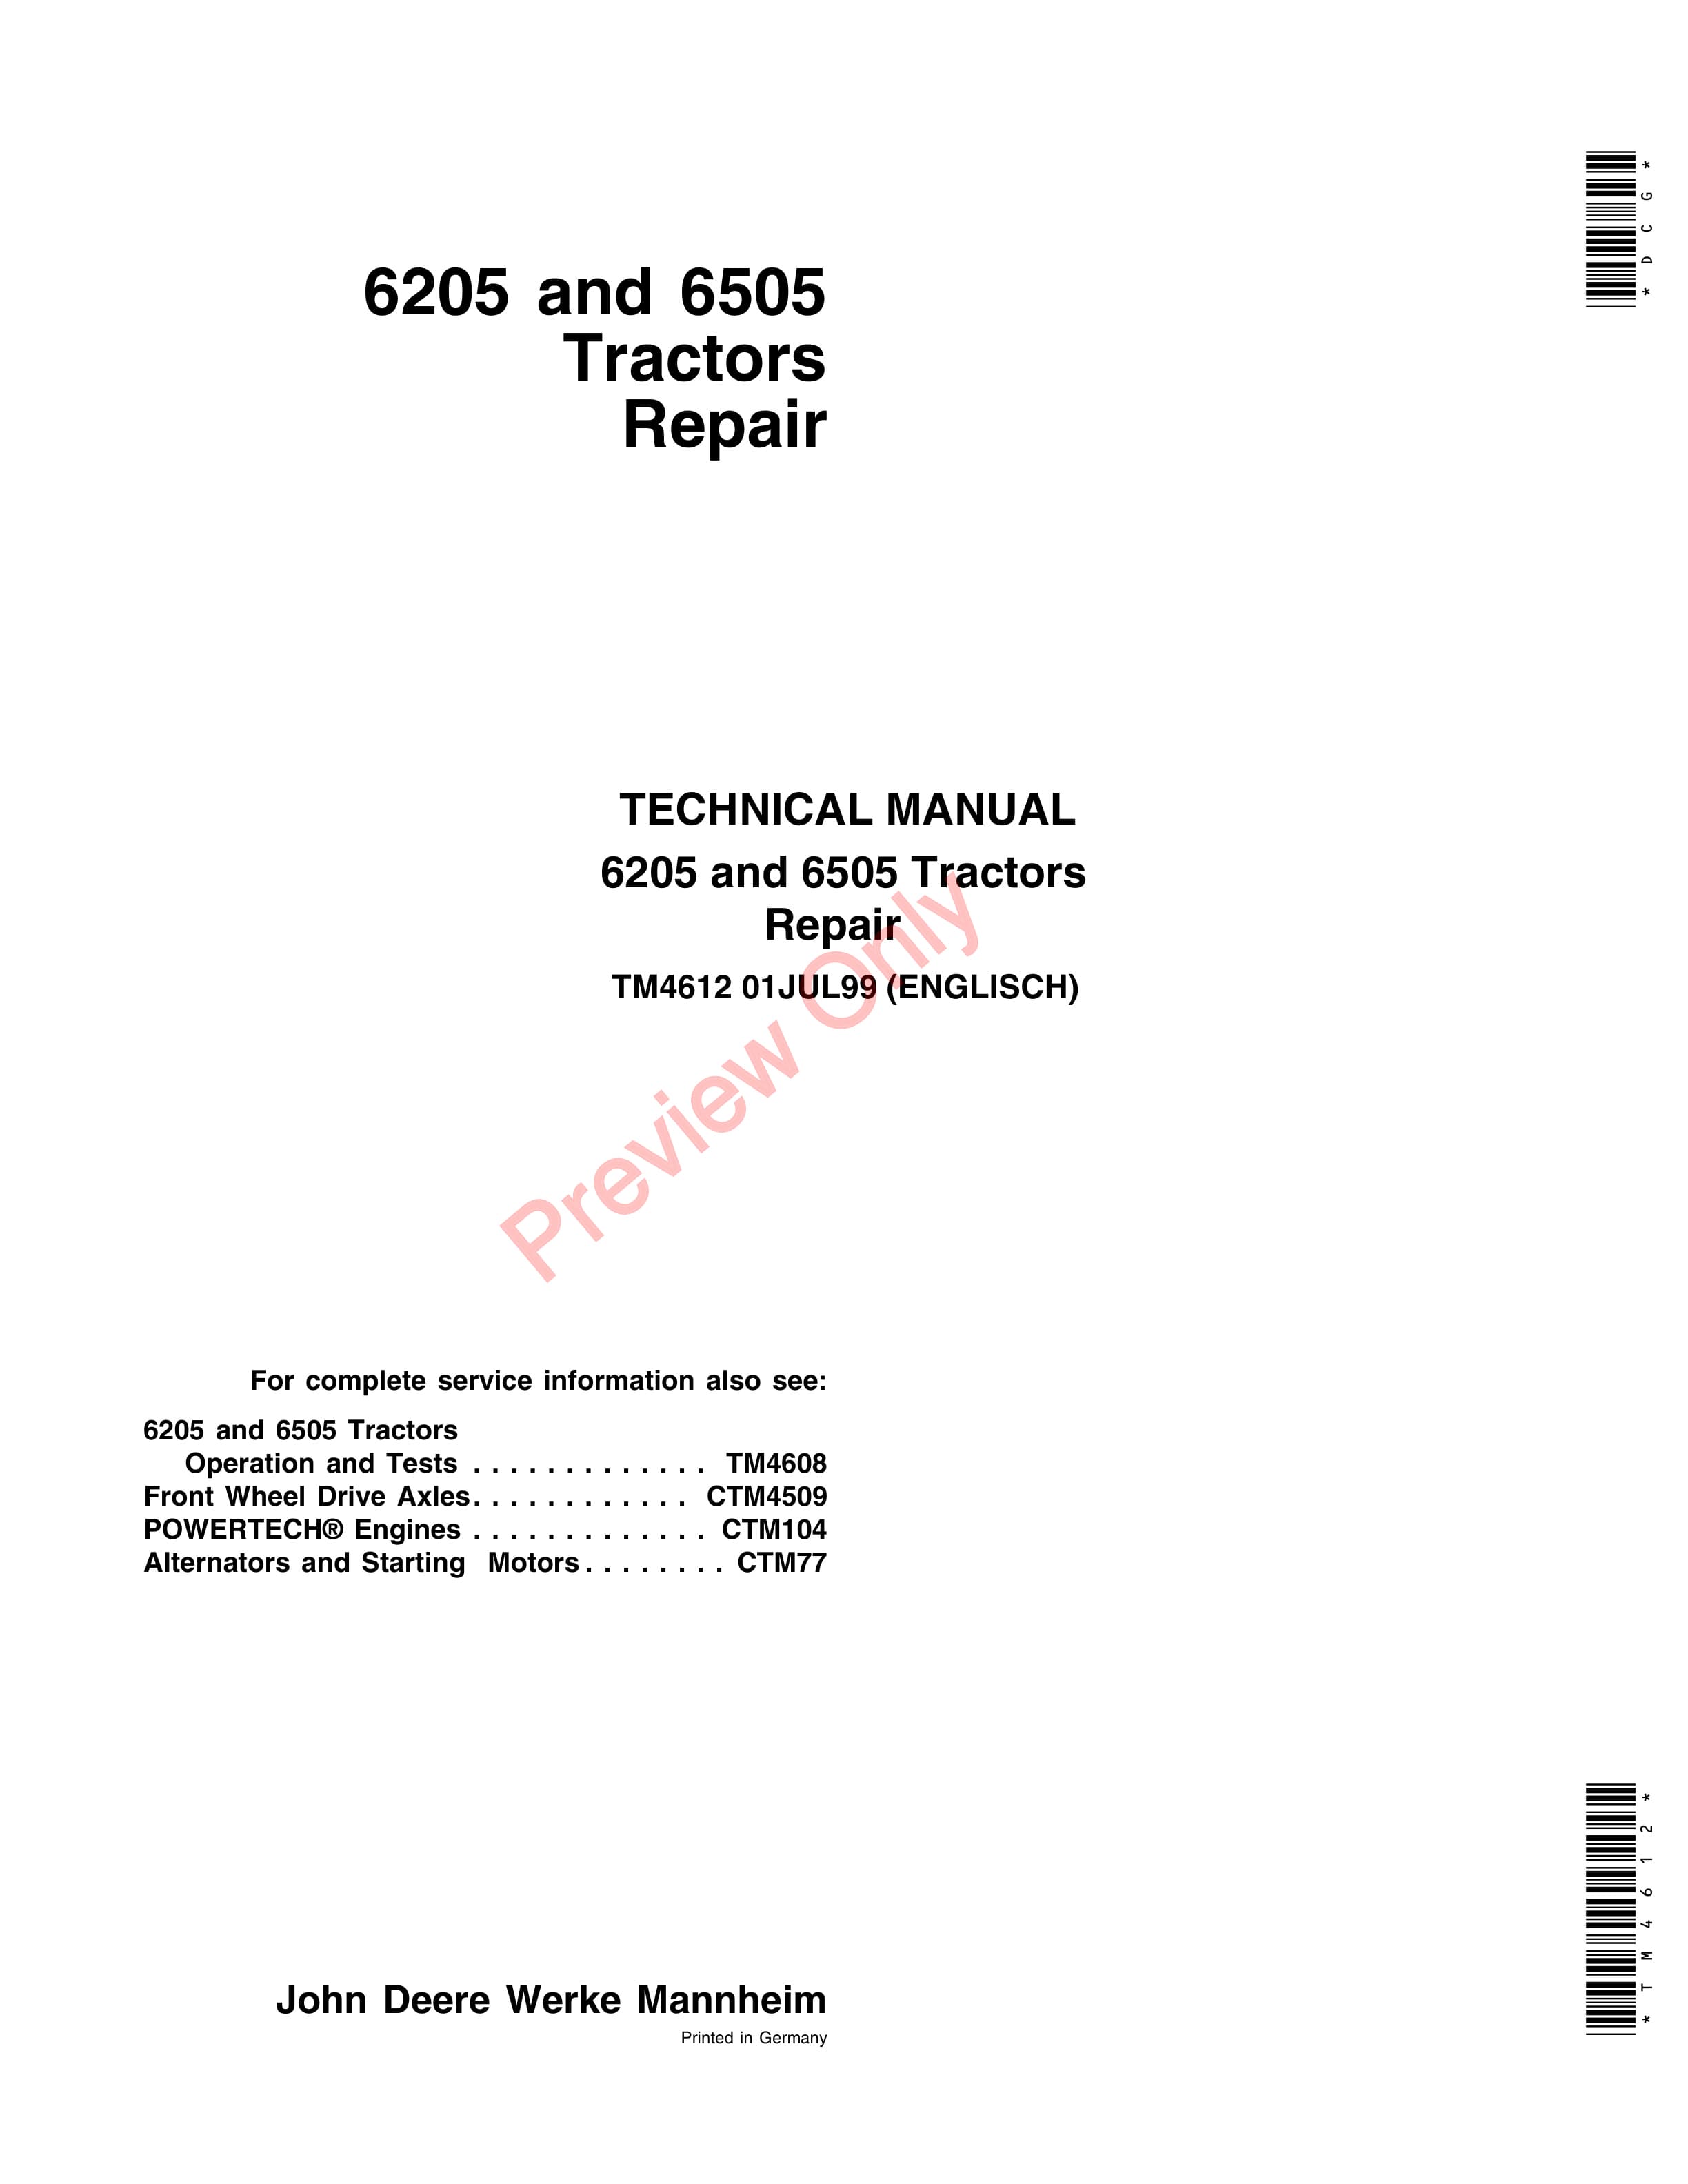 John Deere 6205 and 6505 Tractors Technical Manual TM4612 01JUL99 1